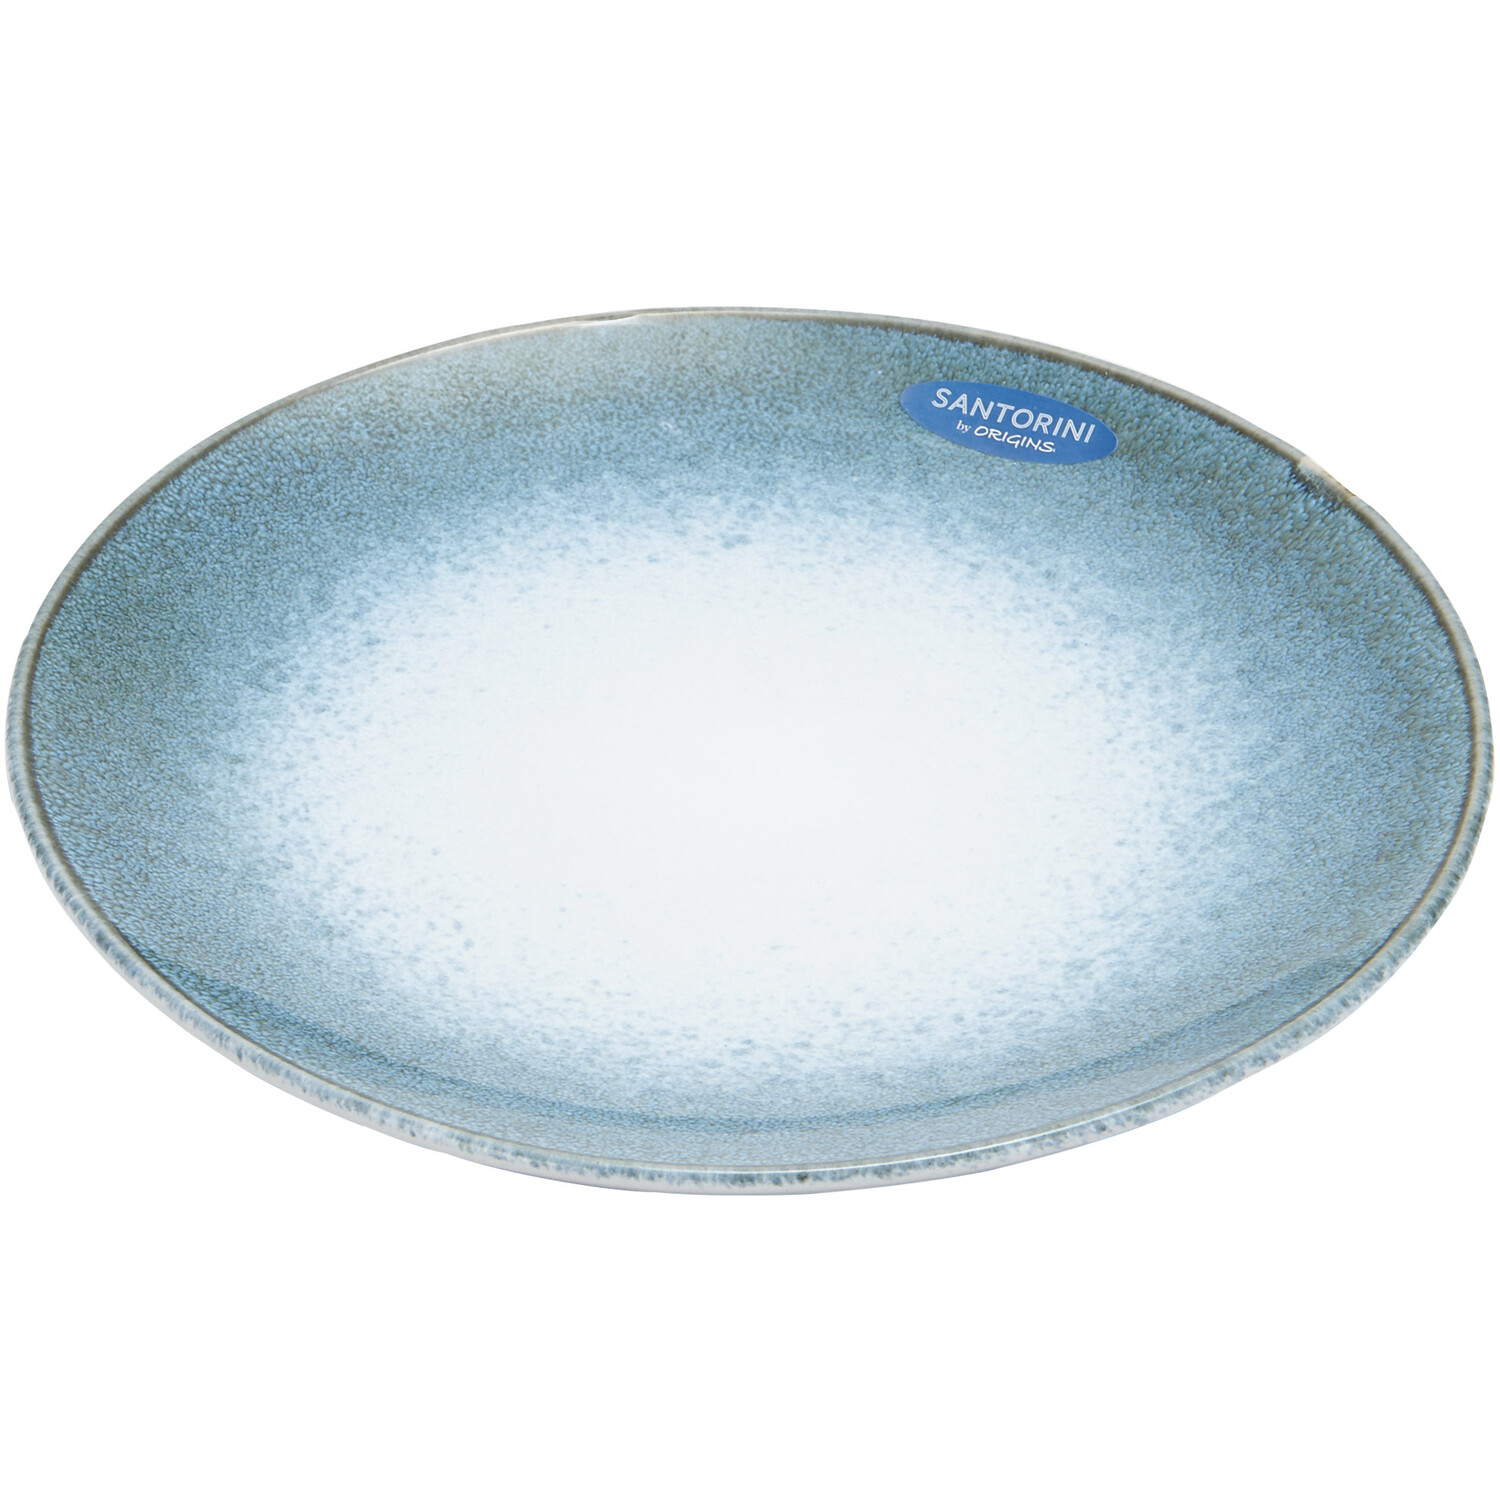 Santorini Reactive Glaze Plate - Blue Image 2